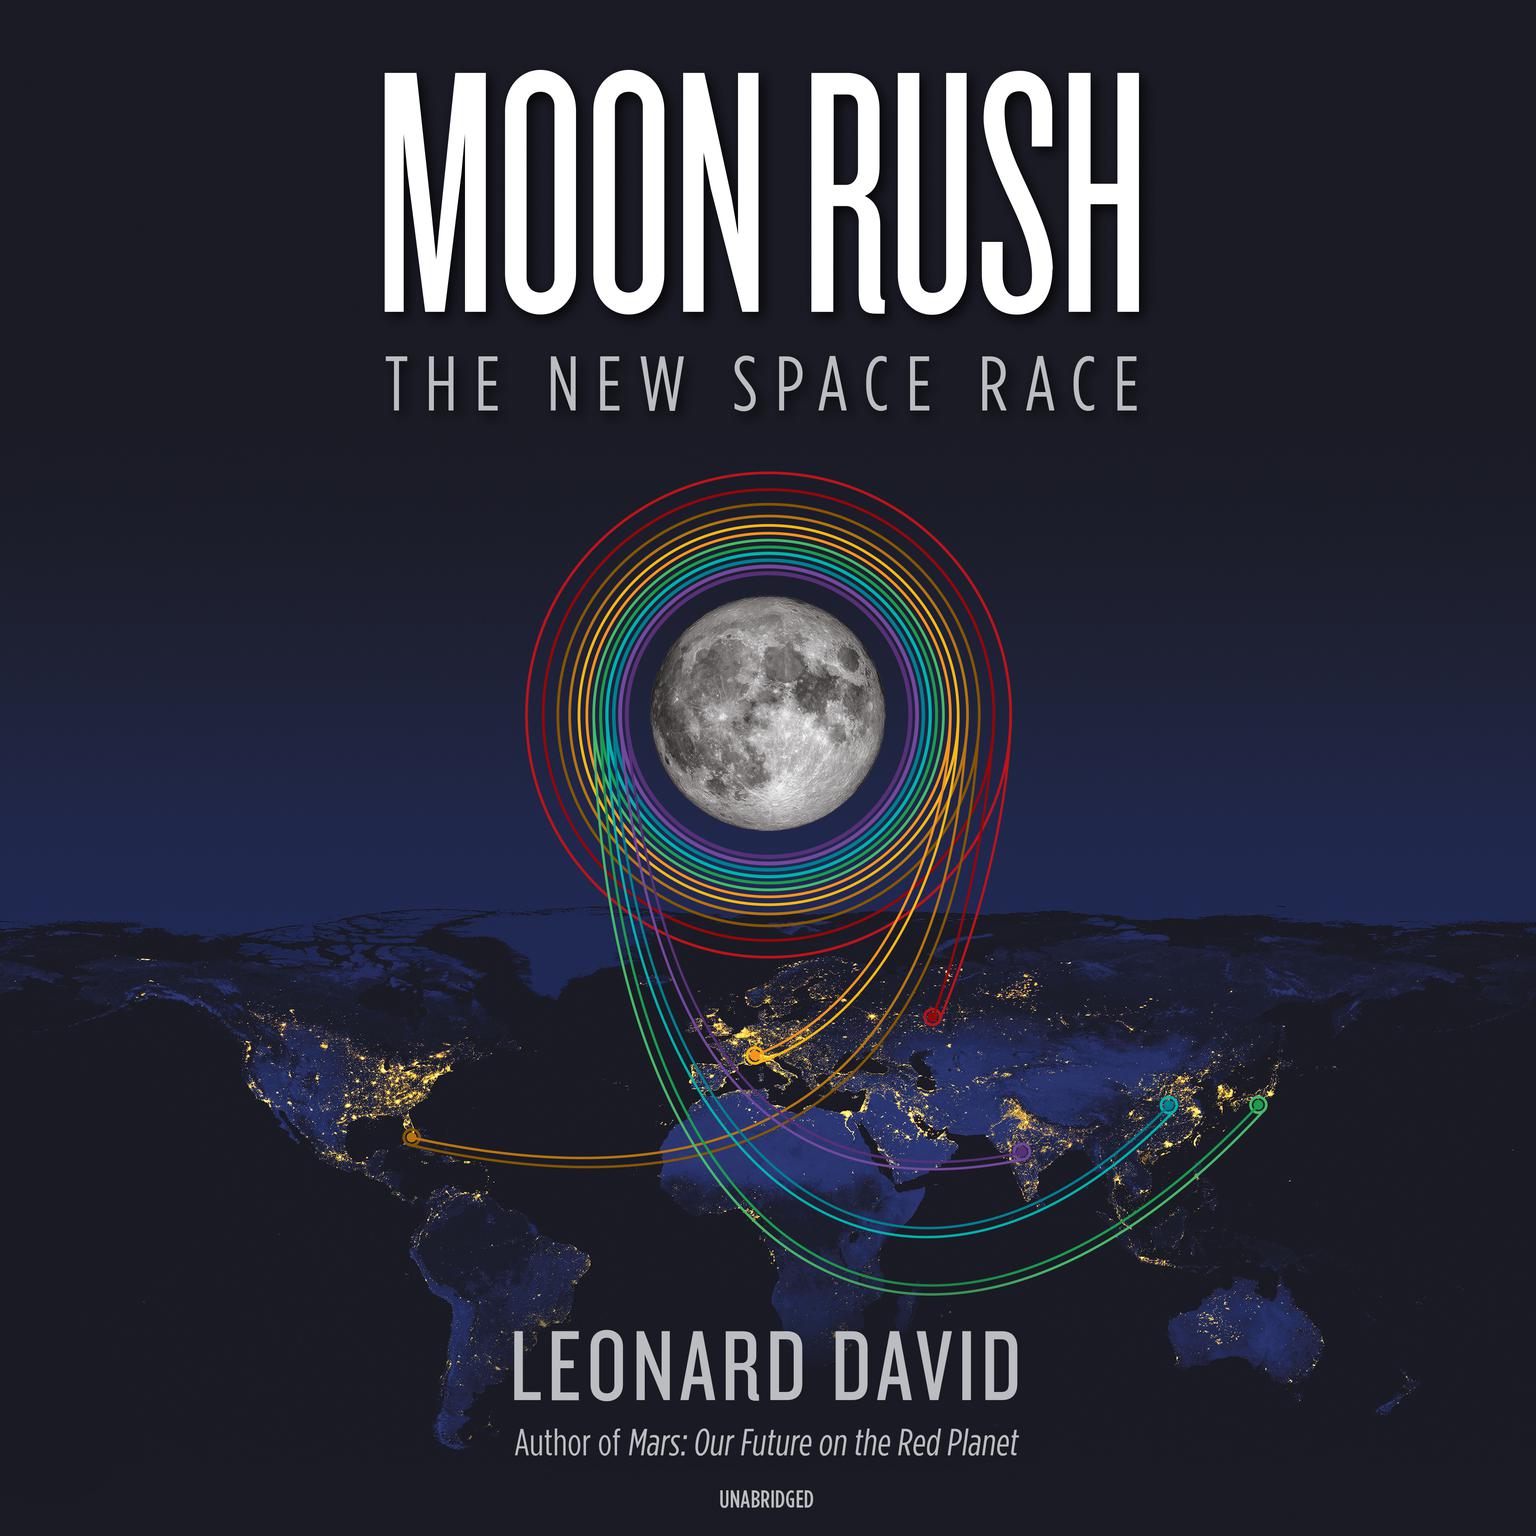 Moon Rush: The New Space Race Audiobook, by Leonard David